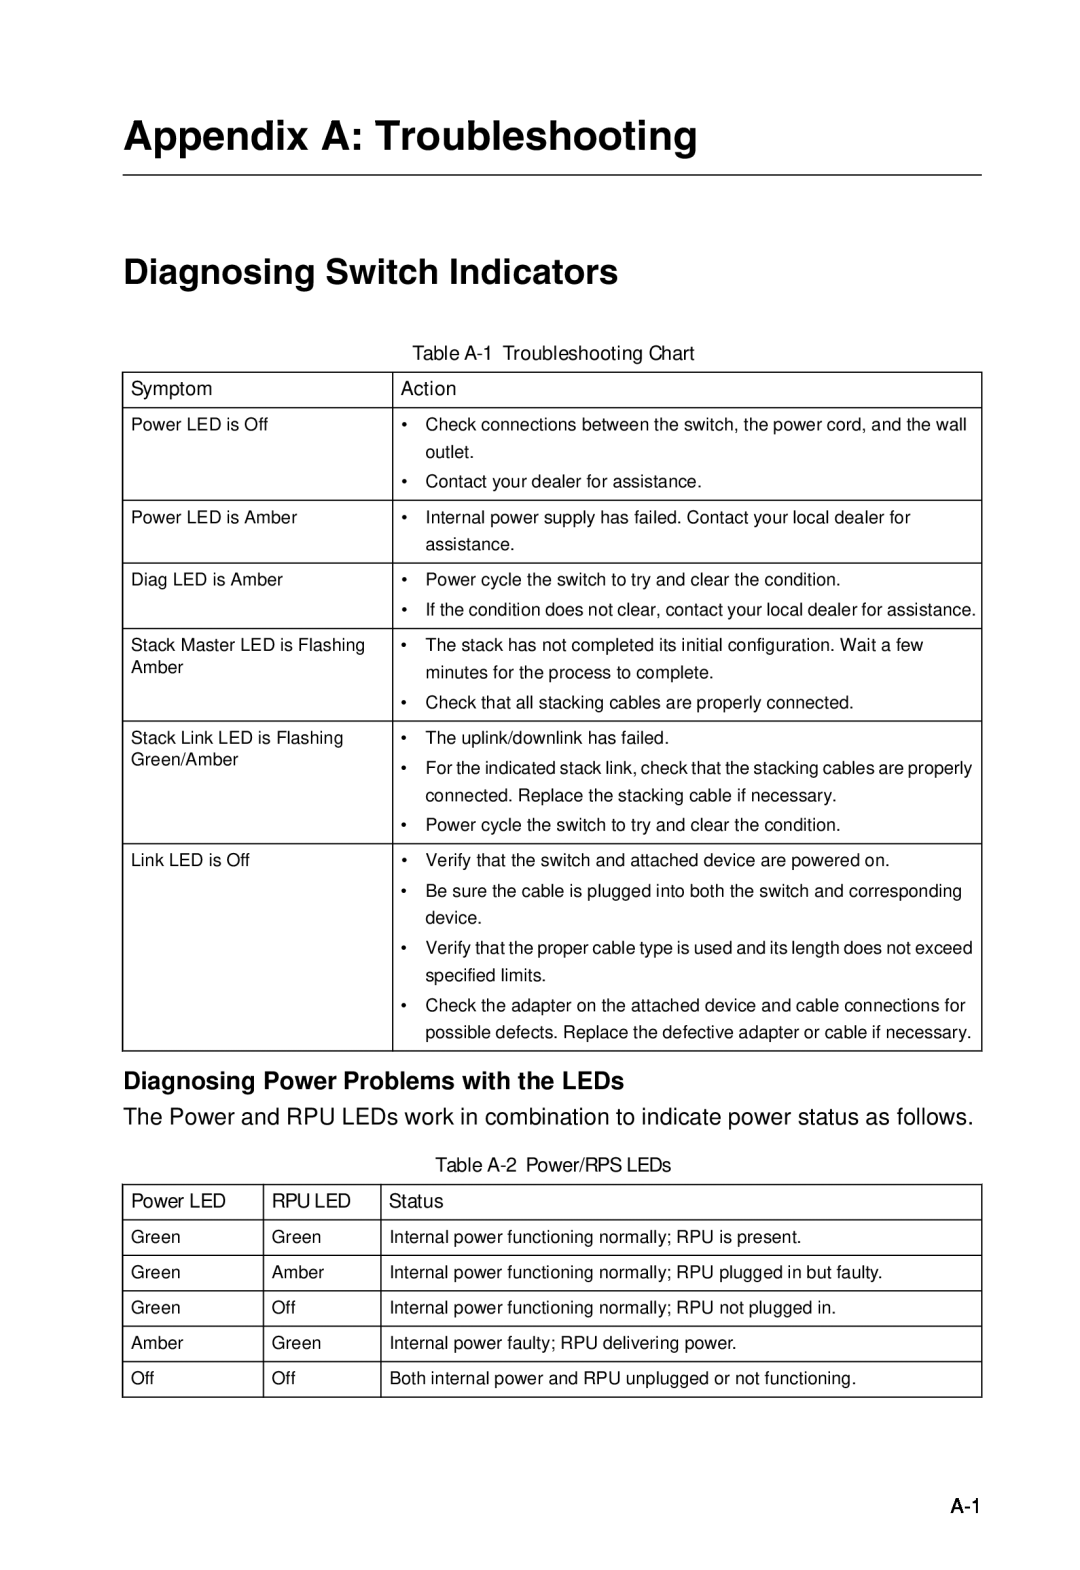 SMC Networks SMC8950EM Appendix A Troubleshooting, Diagnosing Switch Indicators, Diagnosing Power Problems with the LEDs 